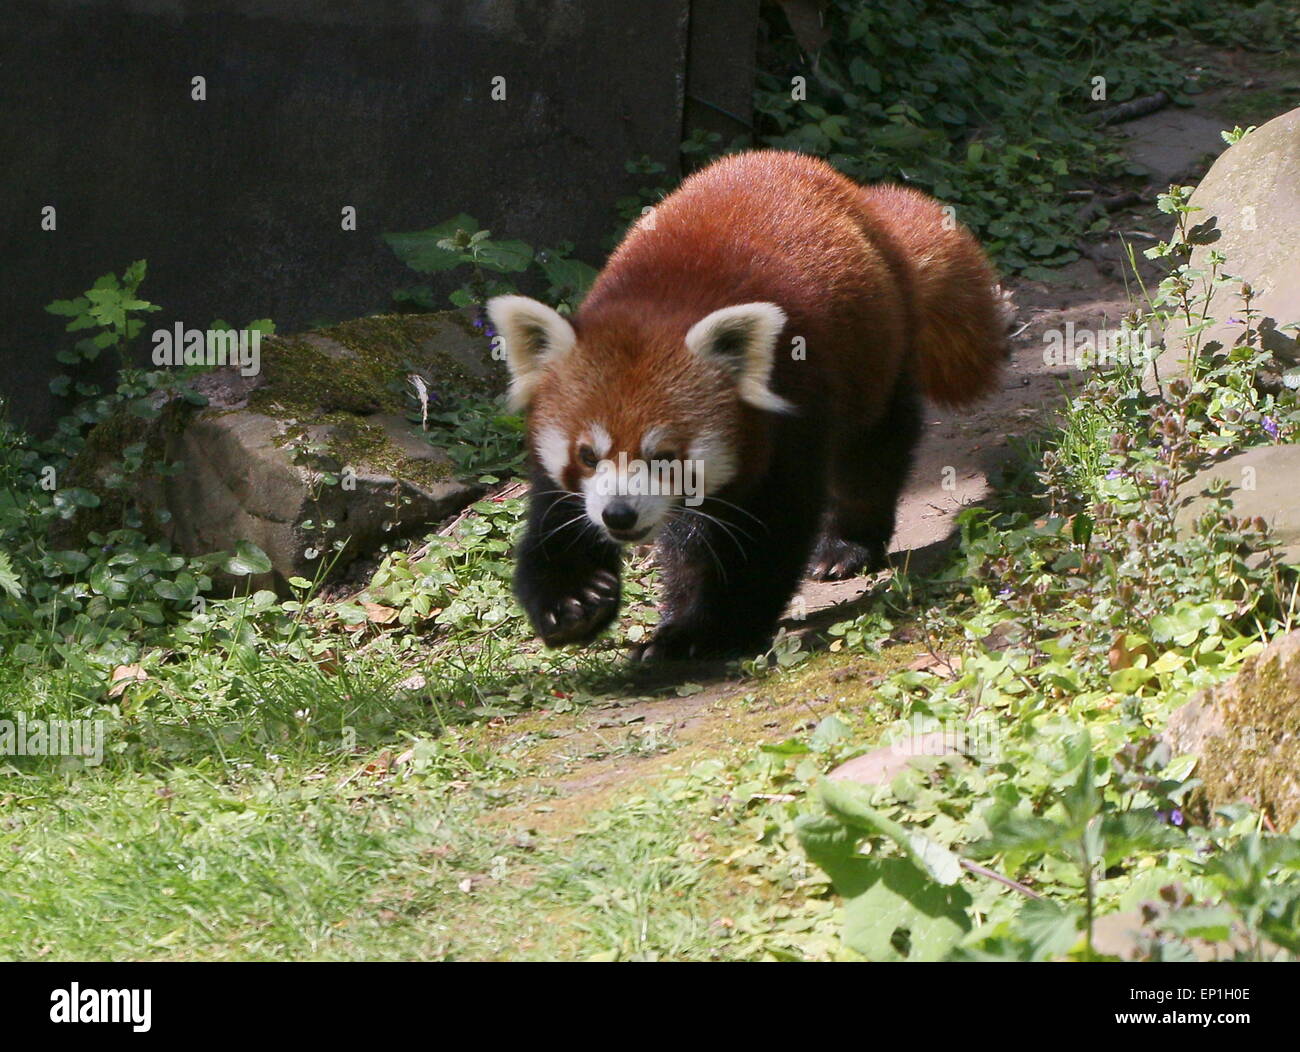 Feisty Asian Red Panda (Ailurus fulgens) walking on the ground Stock Photo